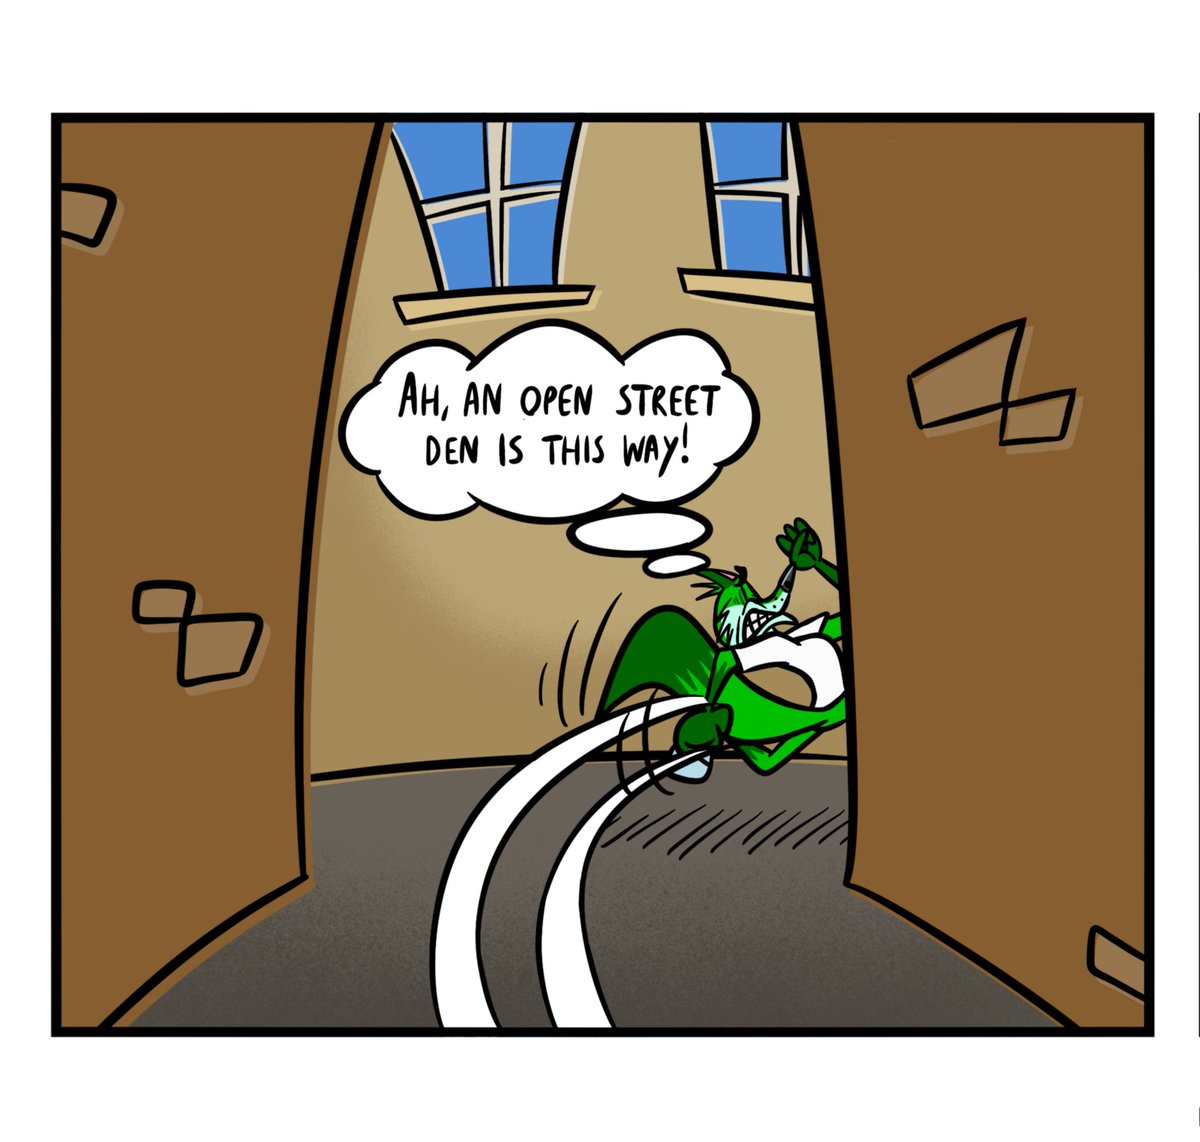 New webcomic strip coming tomorrow! 

(No stealing please)

#wip #cartoon #kaleofox #digitalcomic #comingsoon